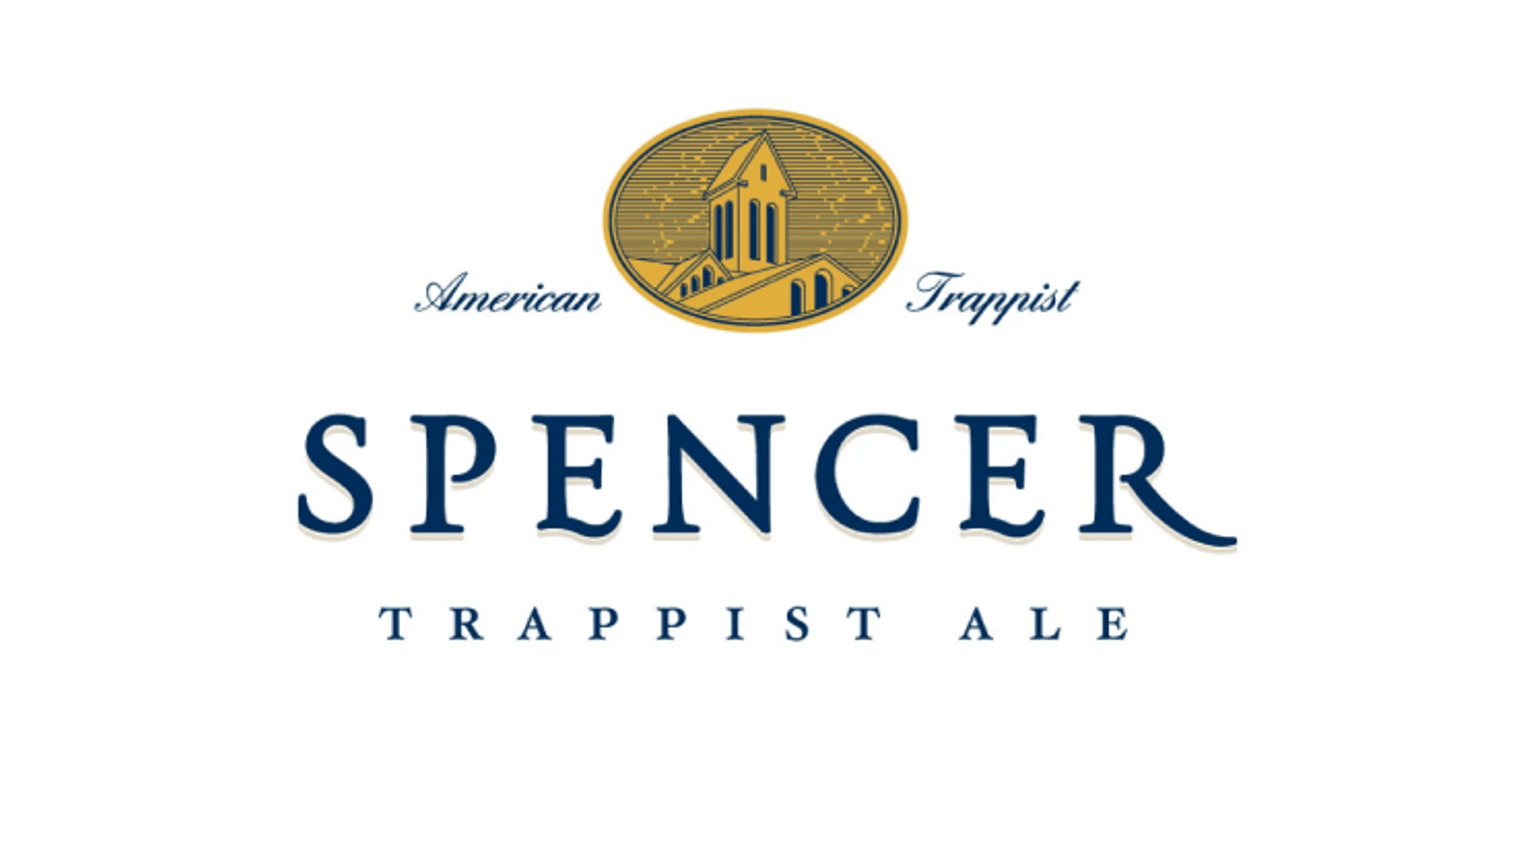 thumbnail for blog article named: Spencer, la bière trappiste américaine